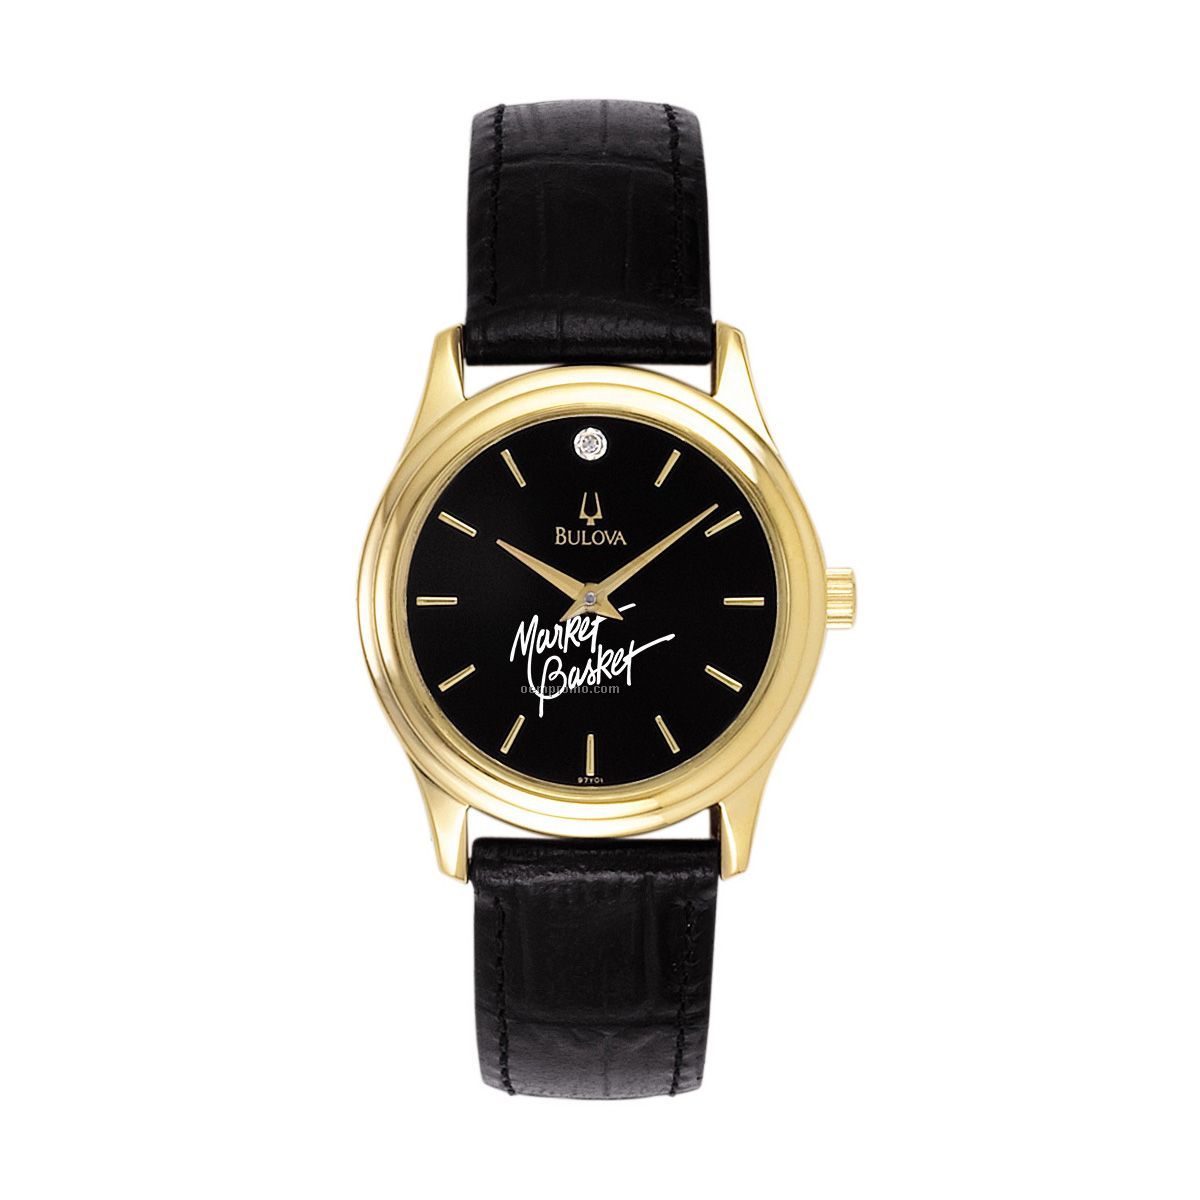  Ladies39; Analog Wrist Watch,China Wholesale,Calendar,Clock and Watch